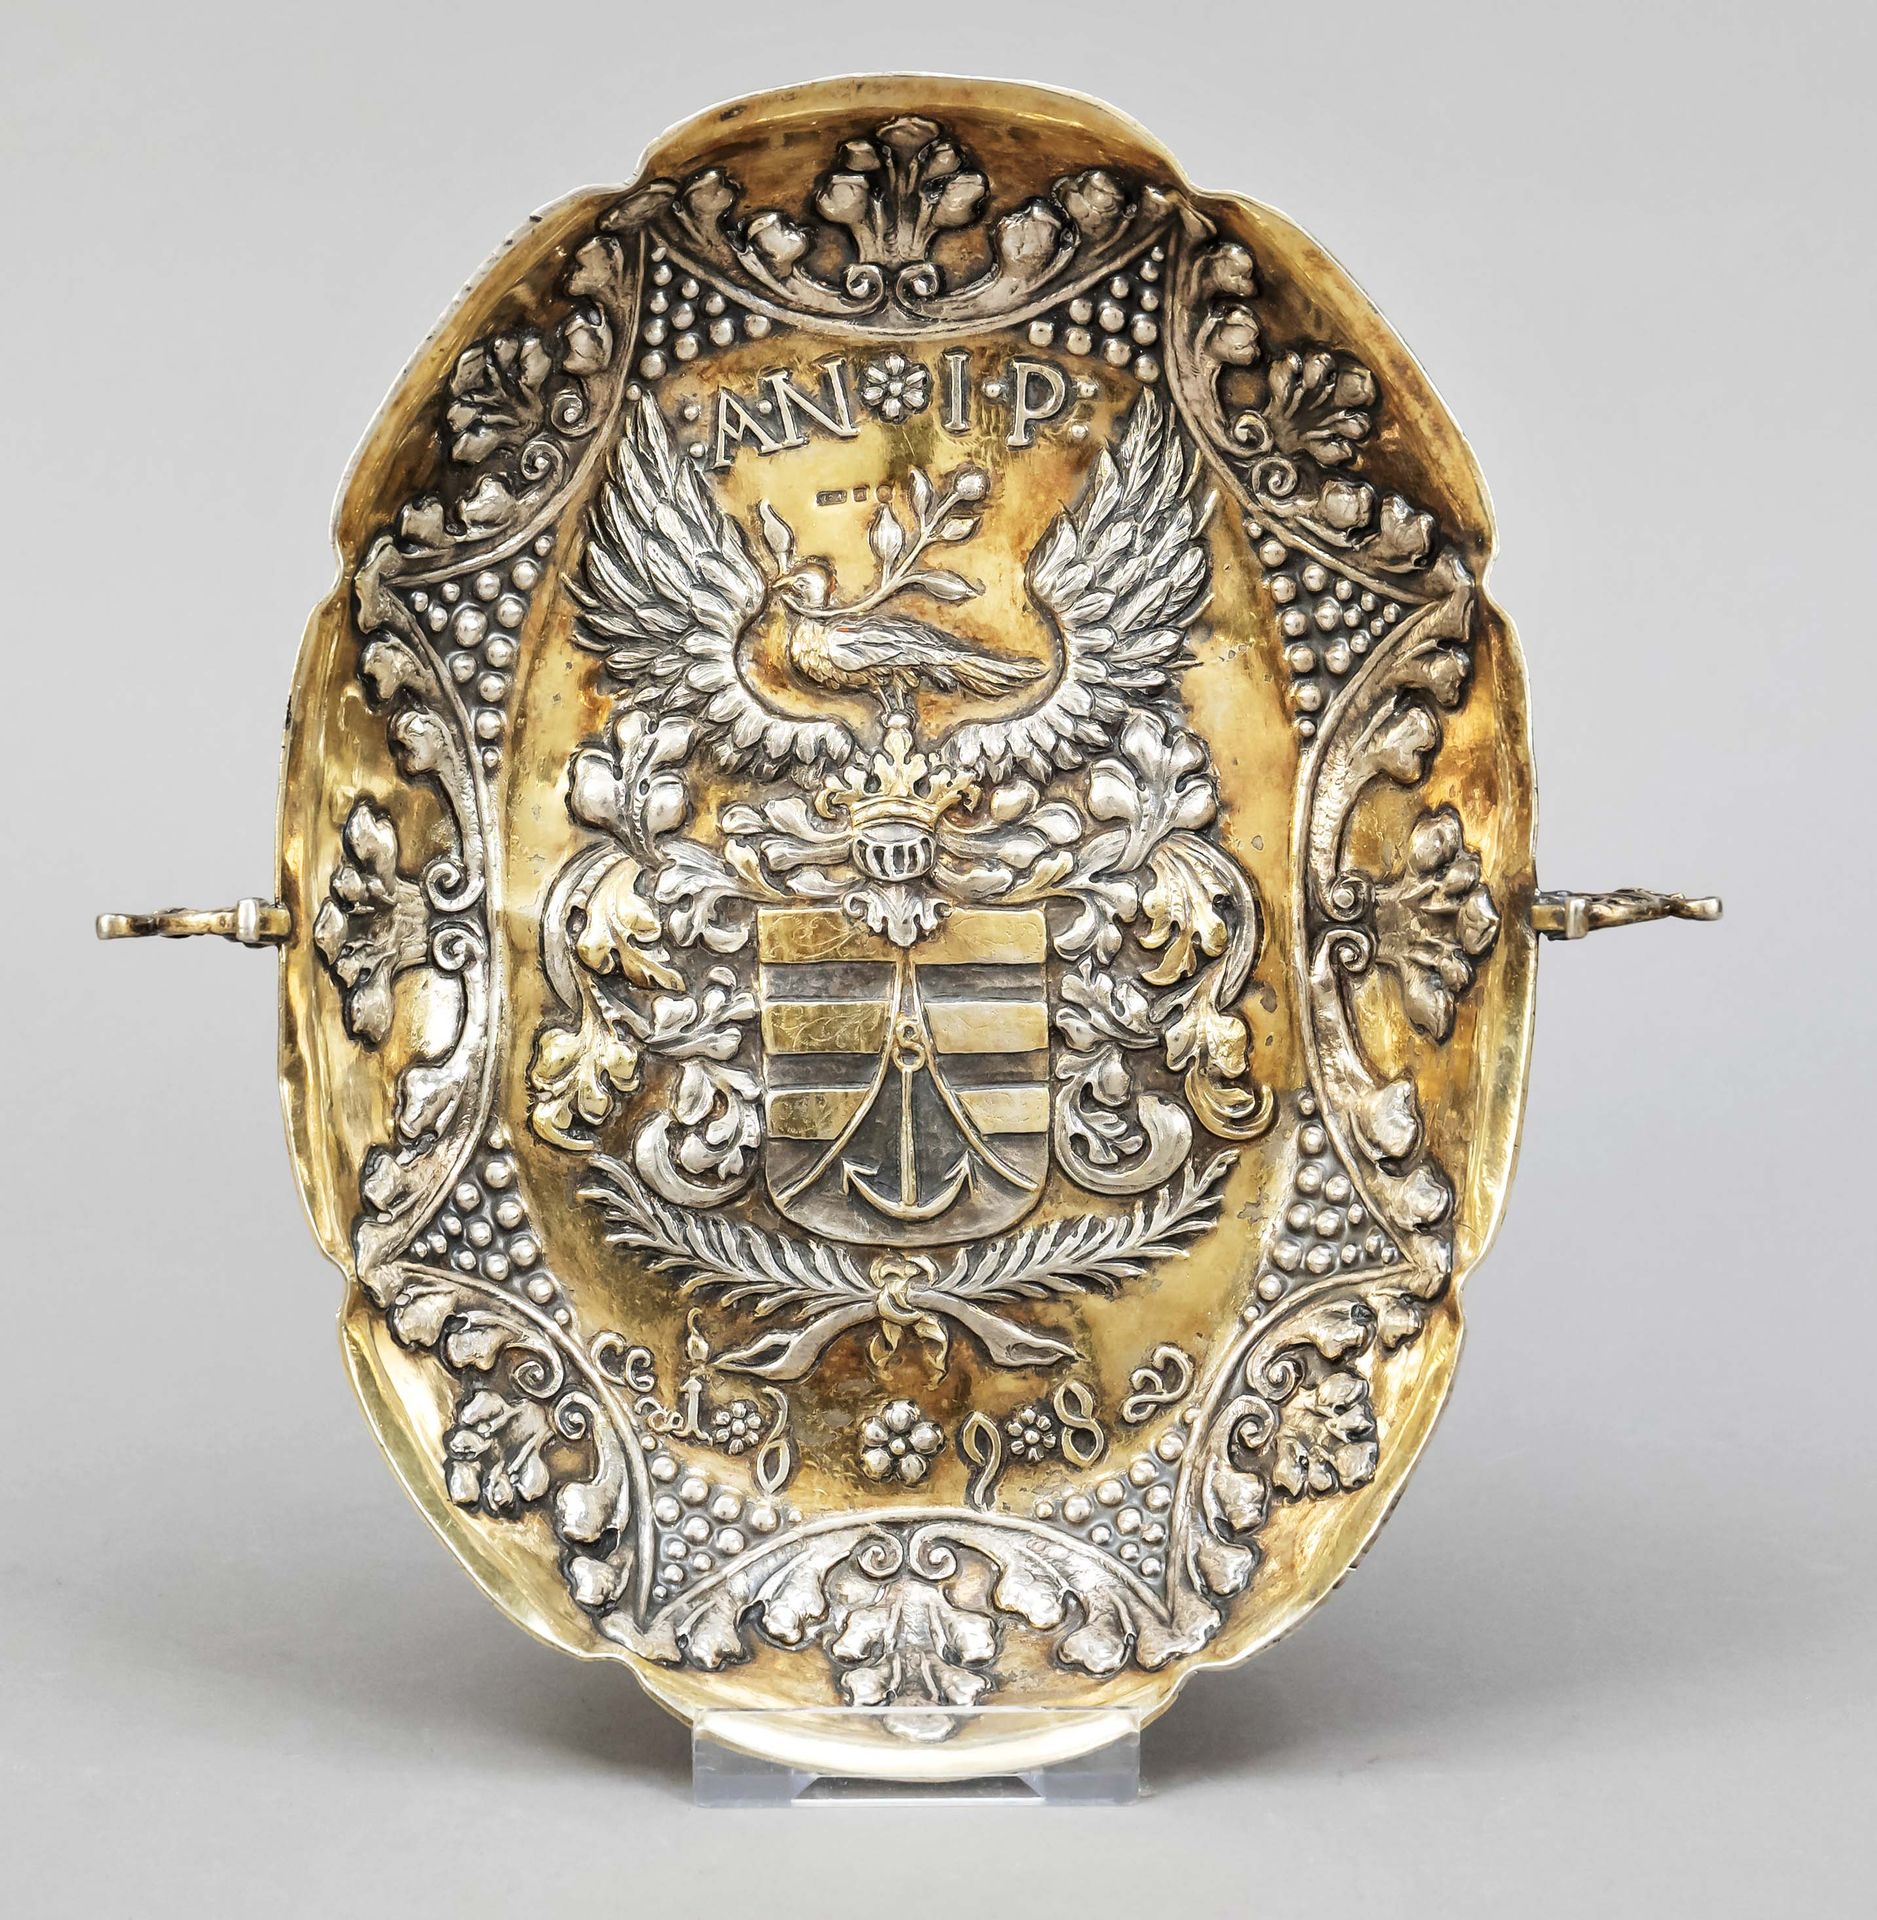 Null 椭圆形碗，17世纪末，银质印记，部分镀金，弯曲的形状，侧面有装饰的把手，侧面有丰富的浮雕装饰，边缘有风格化的花卉装饰，镜子有纹章图案，1698年，长2&hellip;